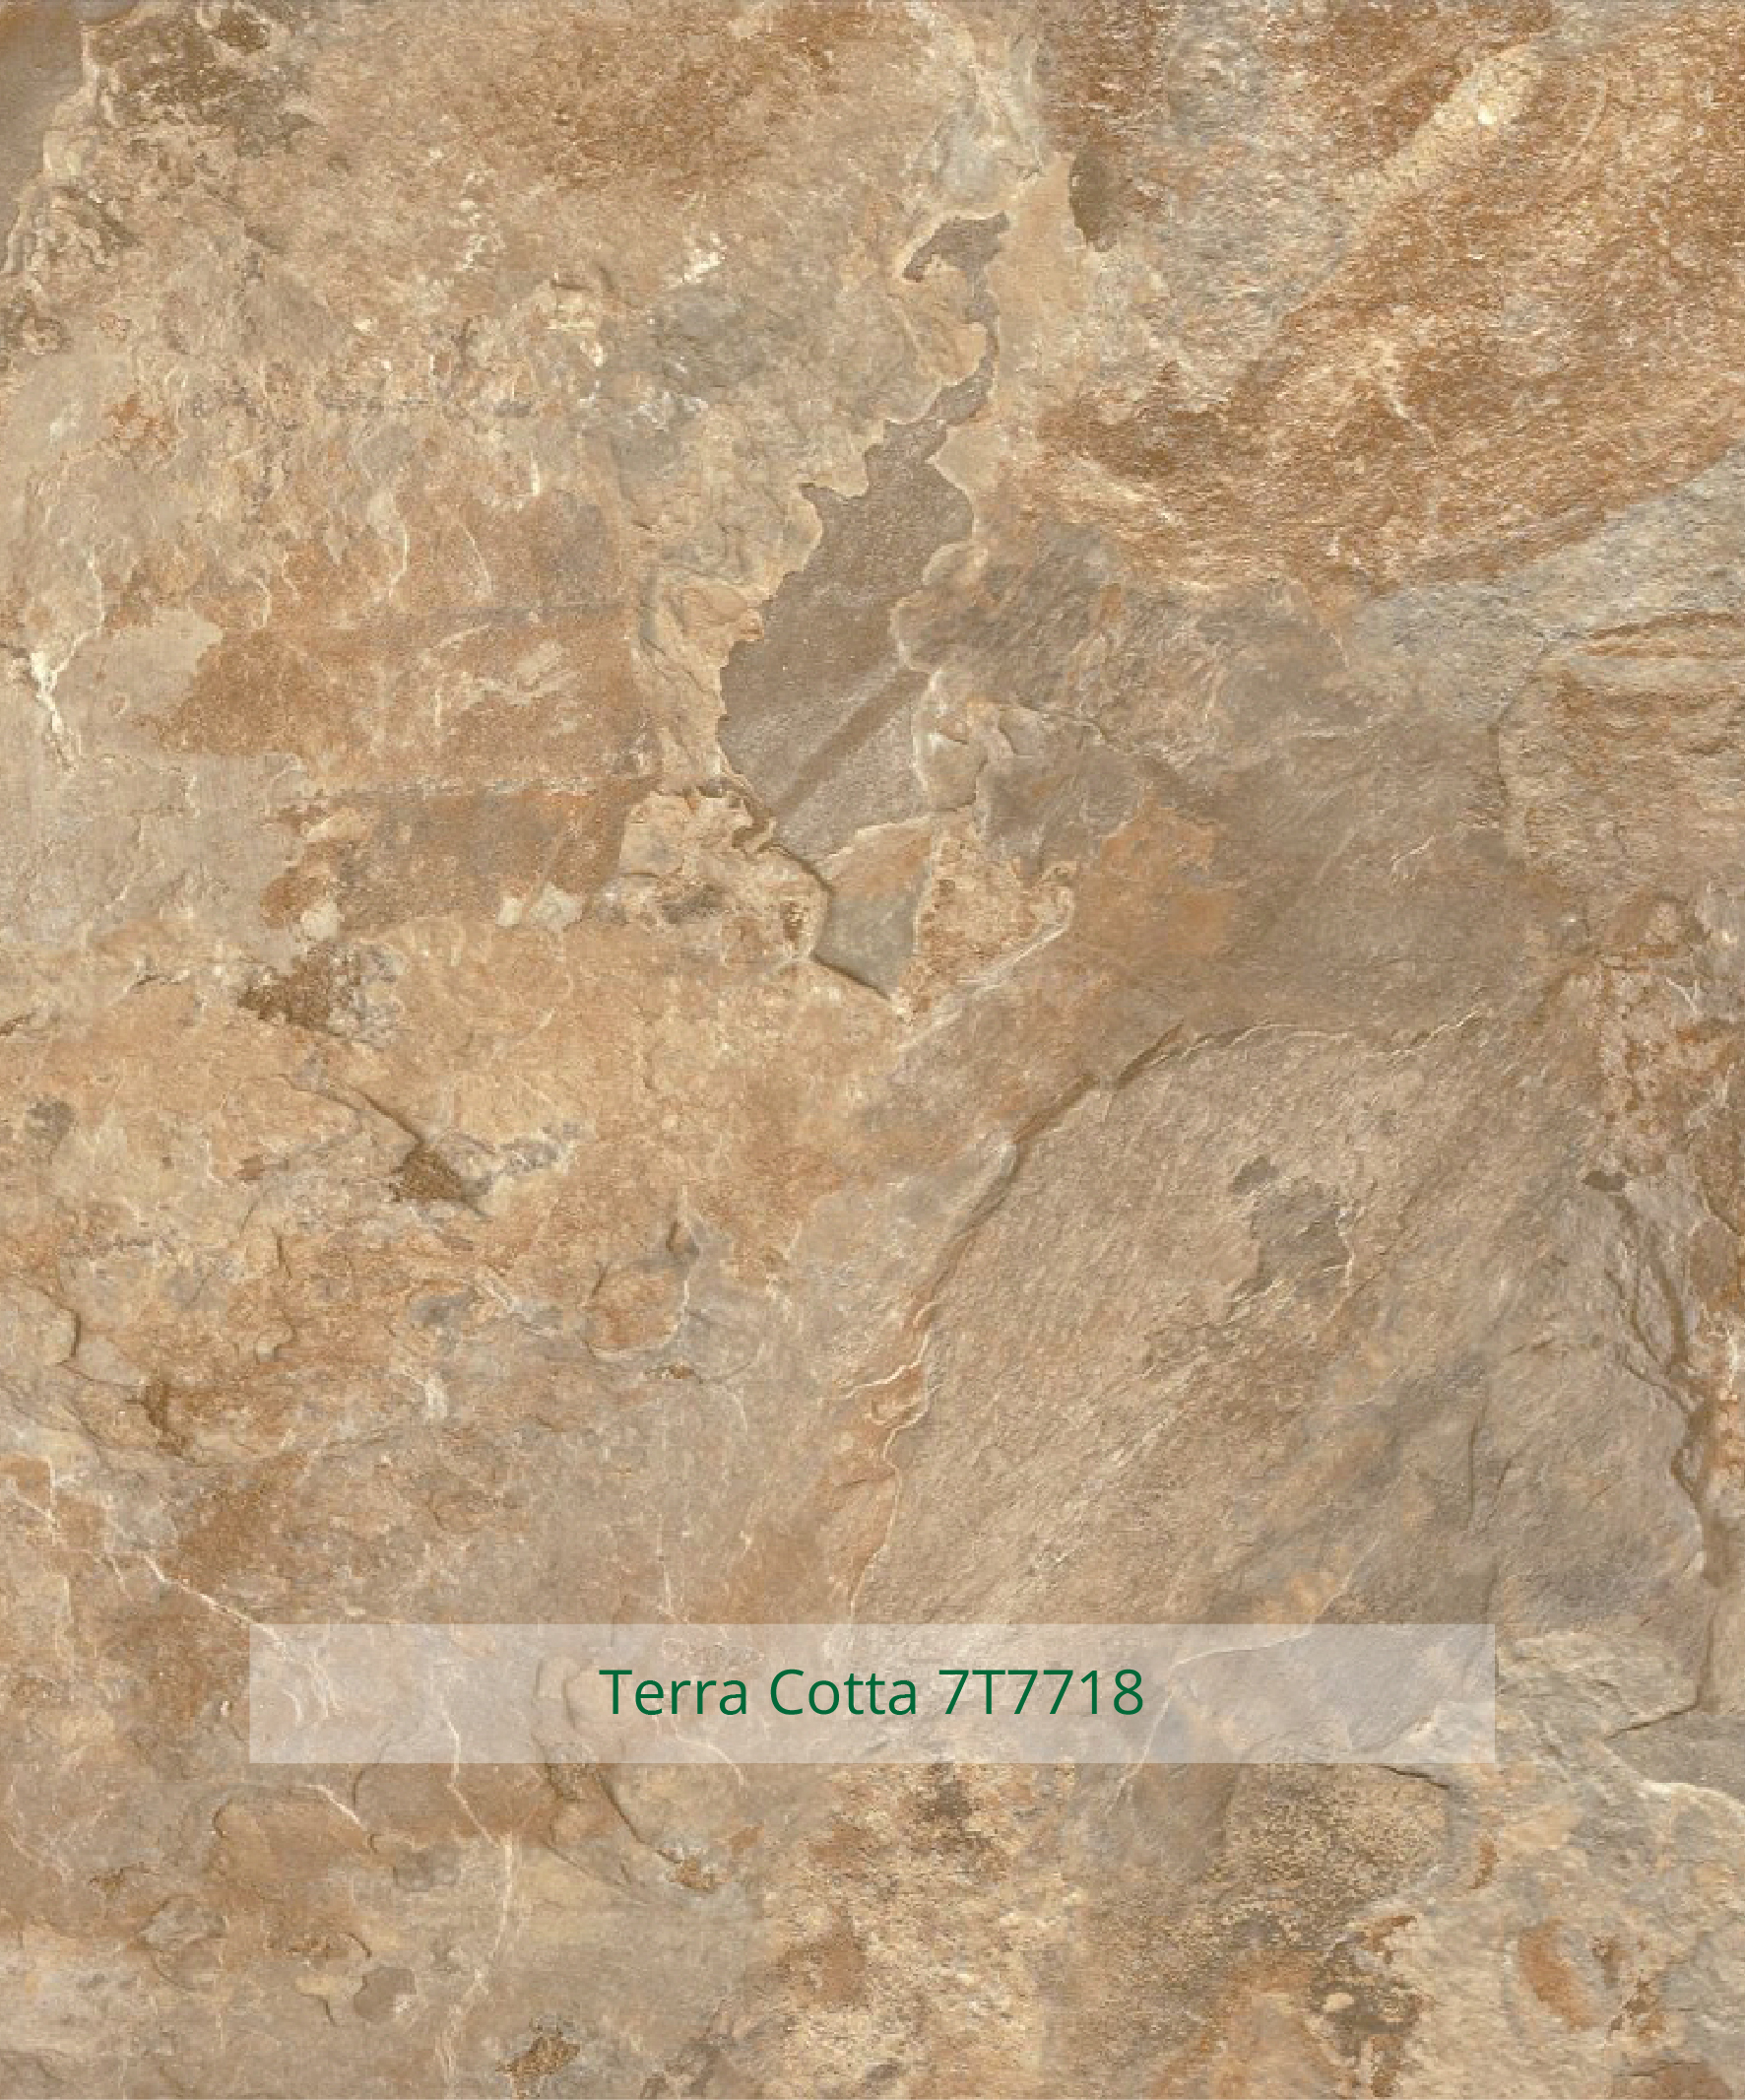 EXCELON Terrazz Terra Cotta 7T7718a